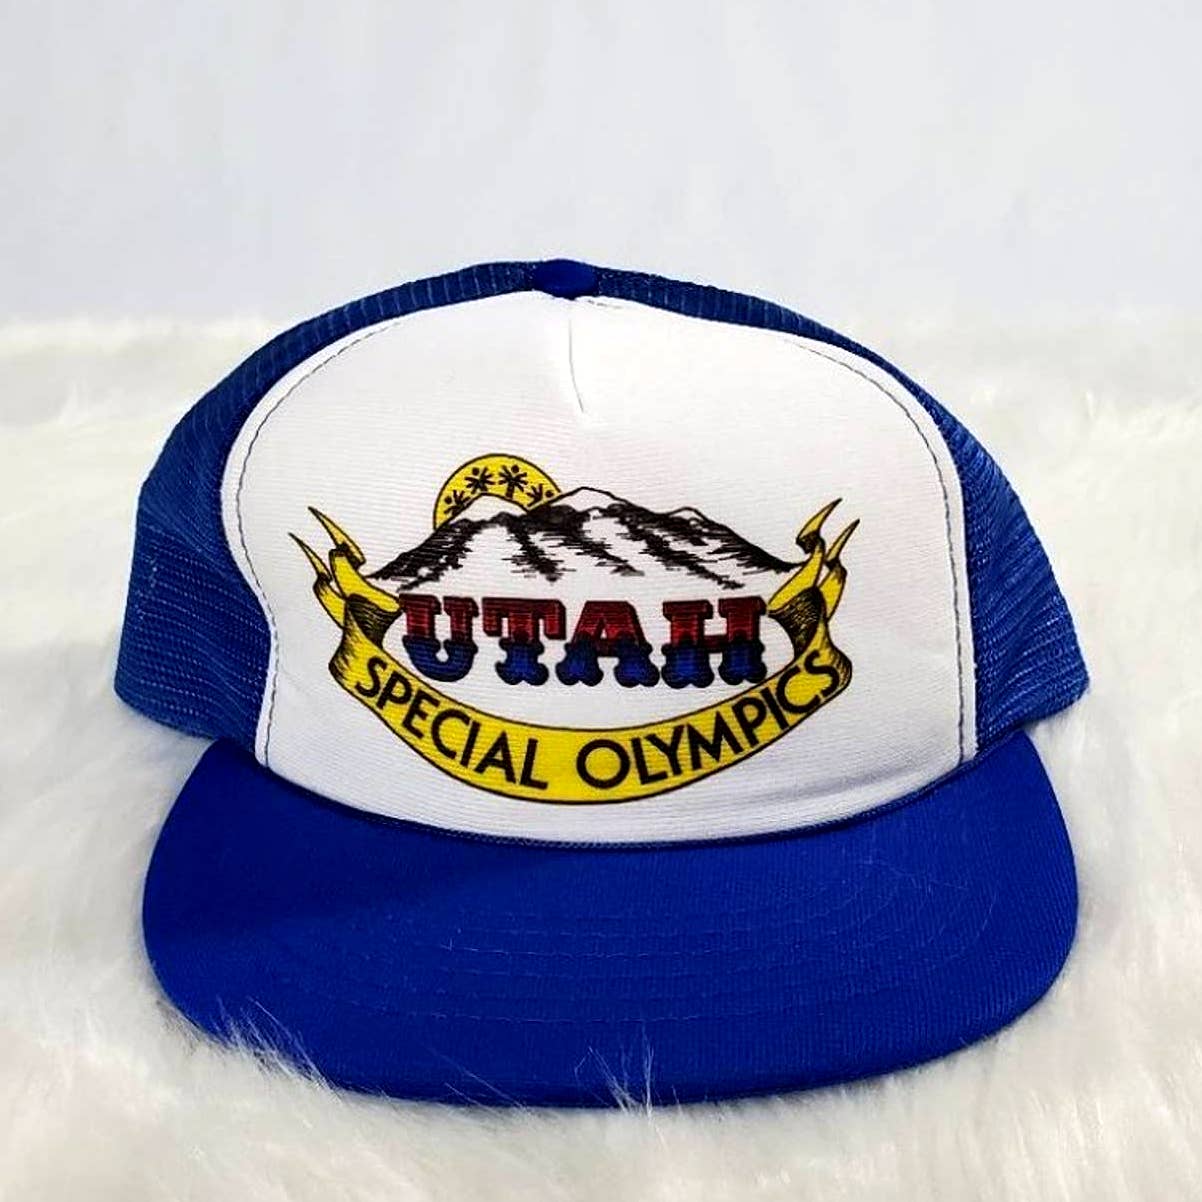 1980s Vintage Utah Special Olympics Snapback